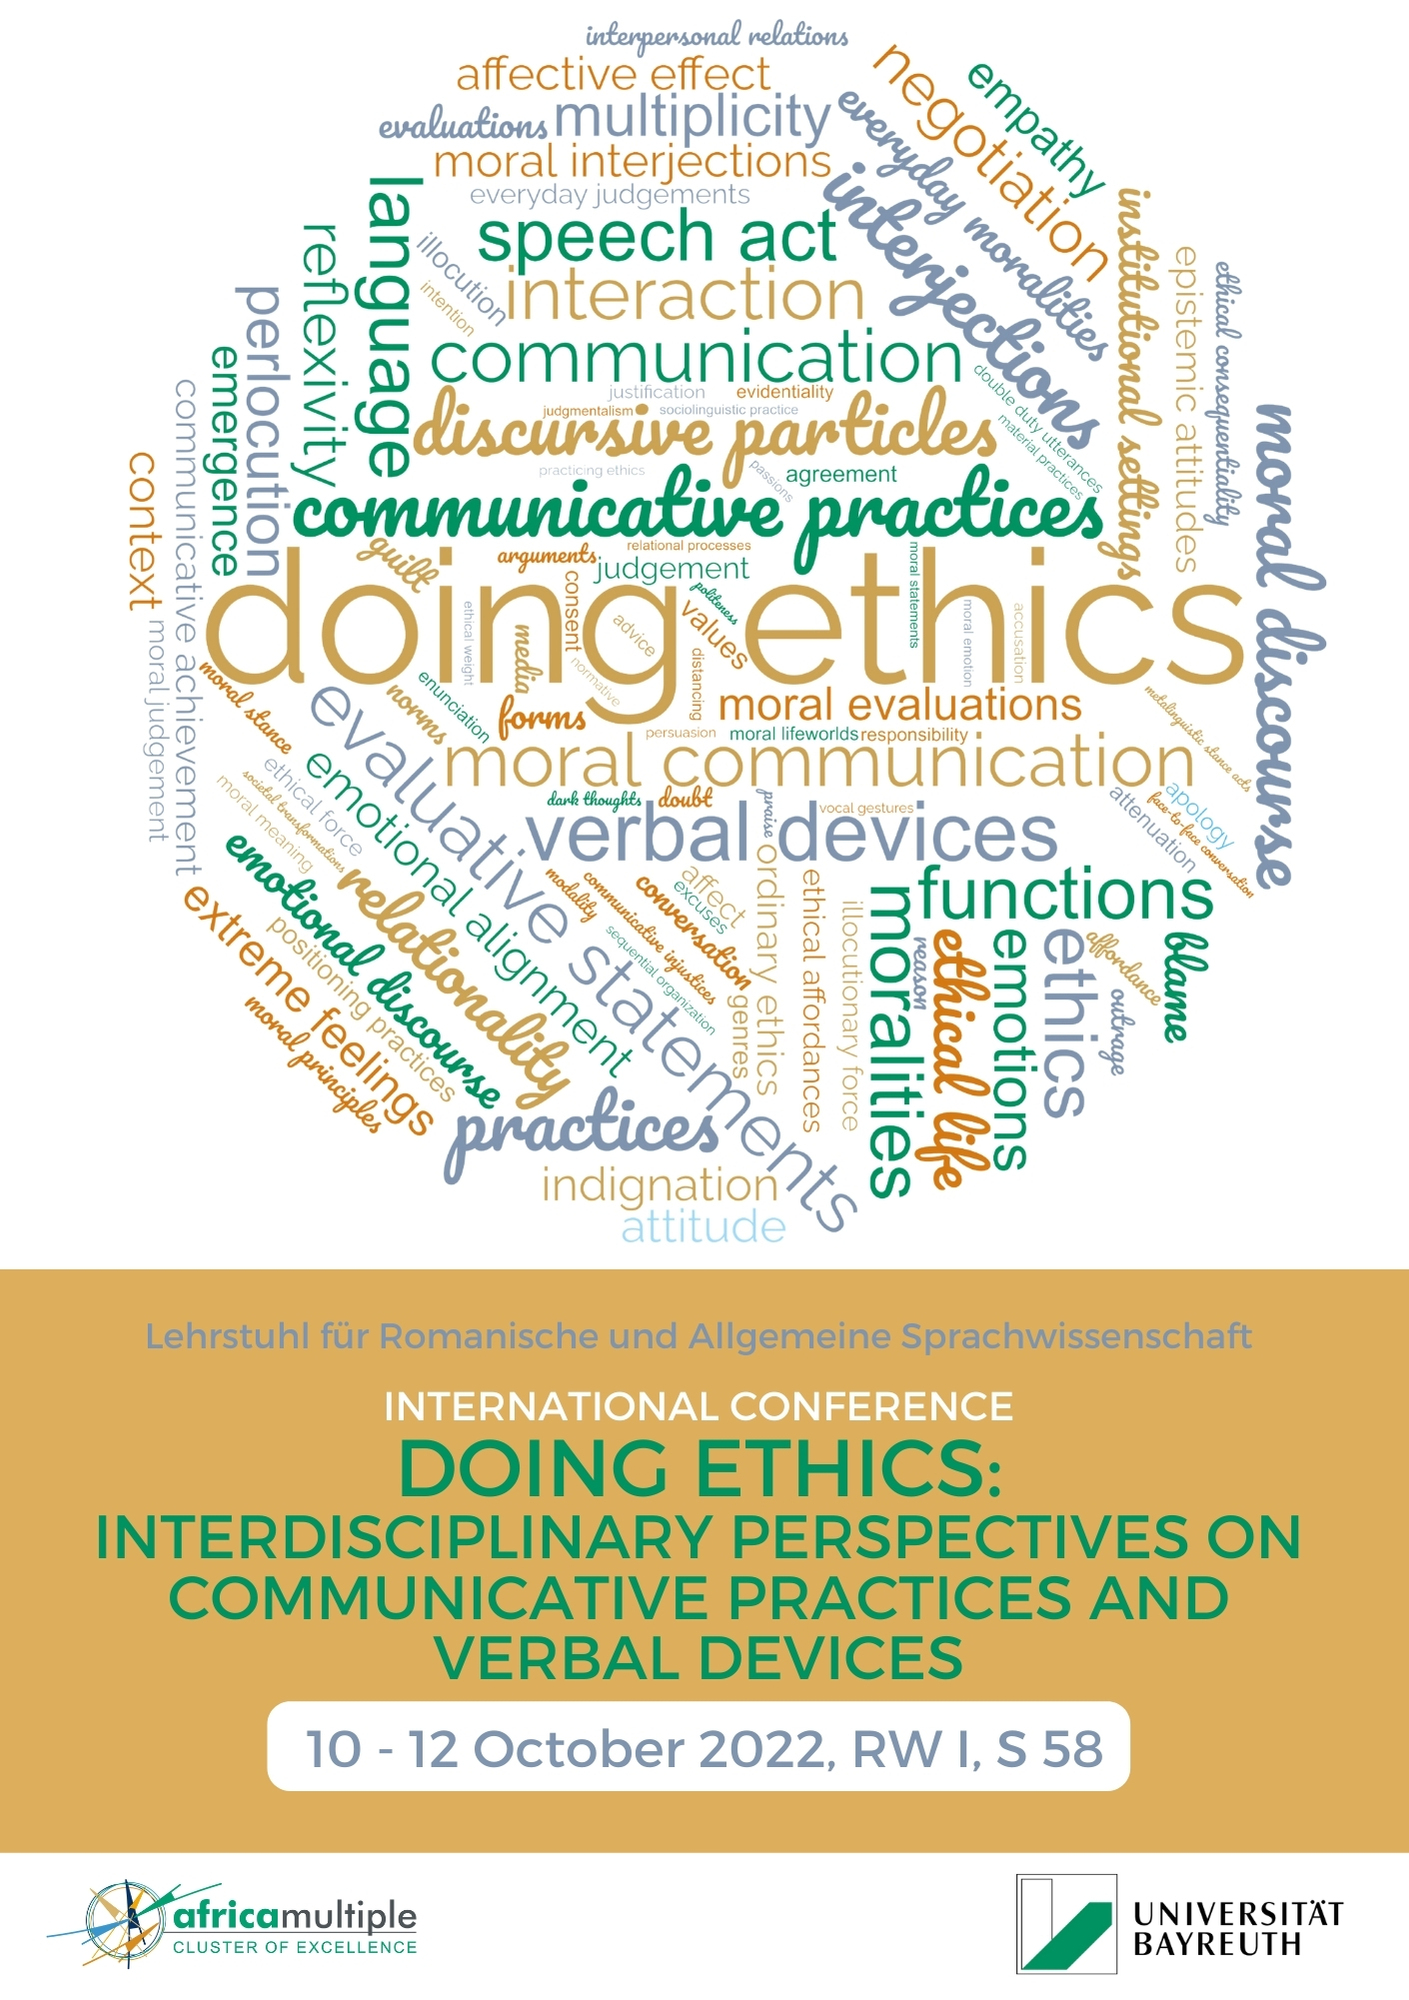 Workshop Doing ethics: